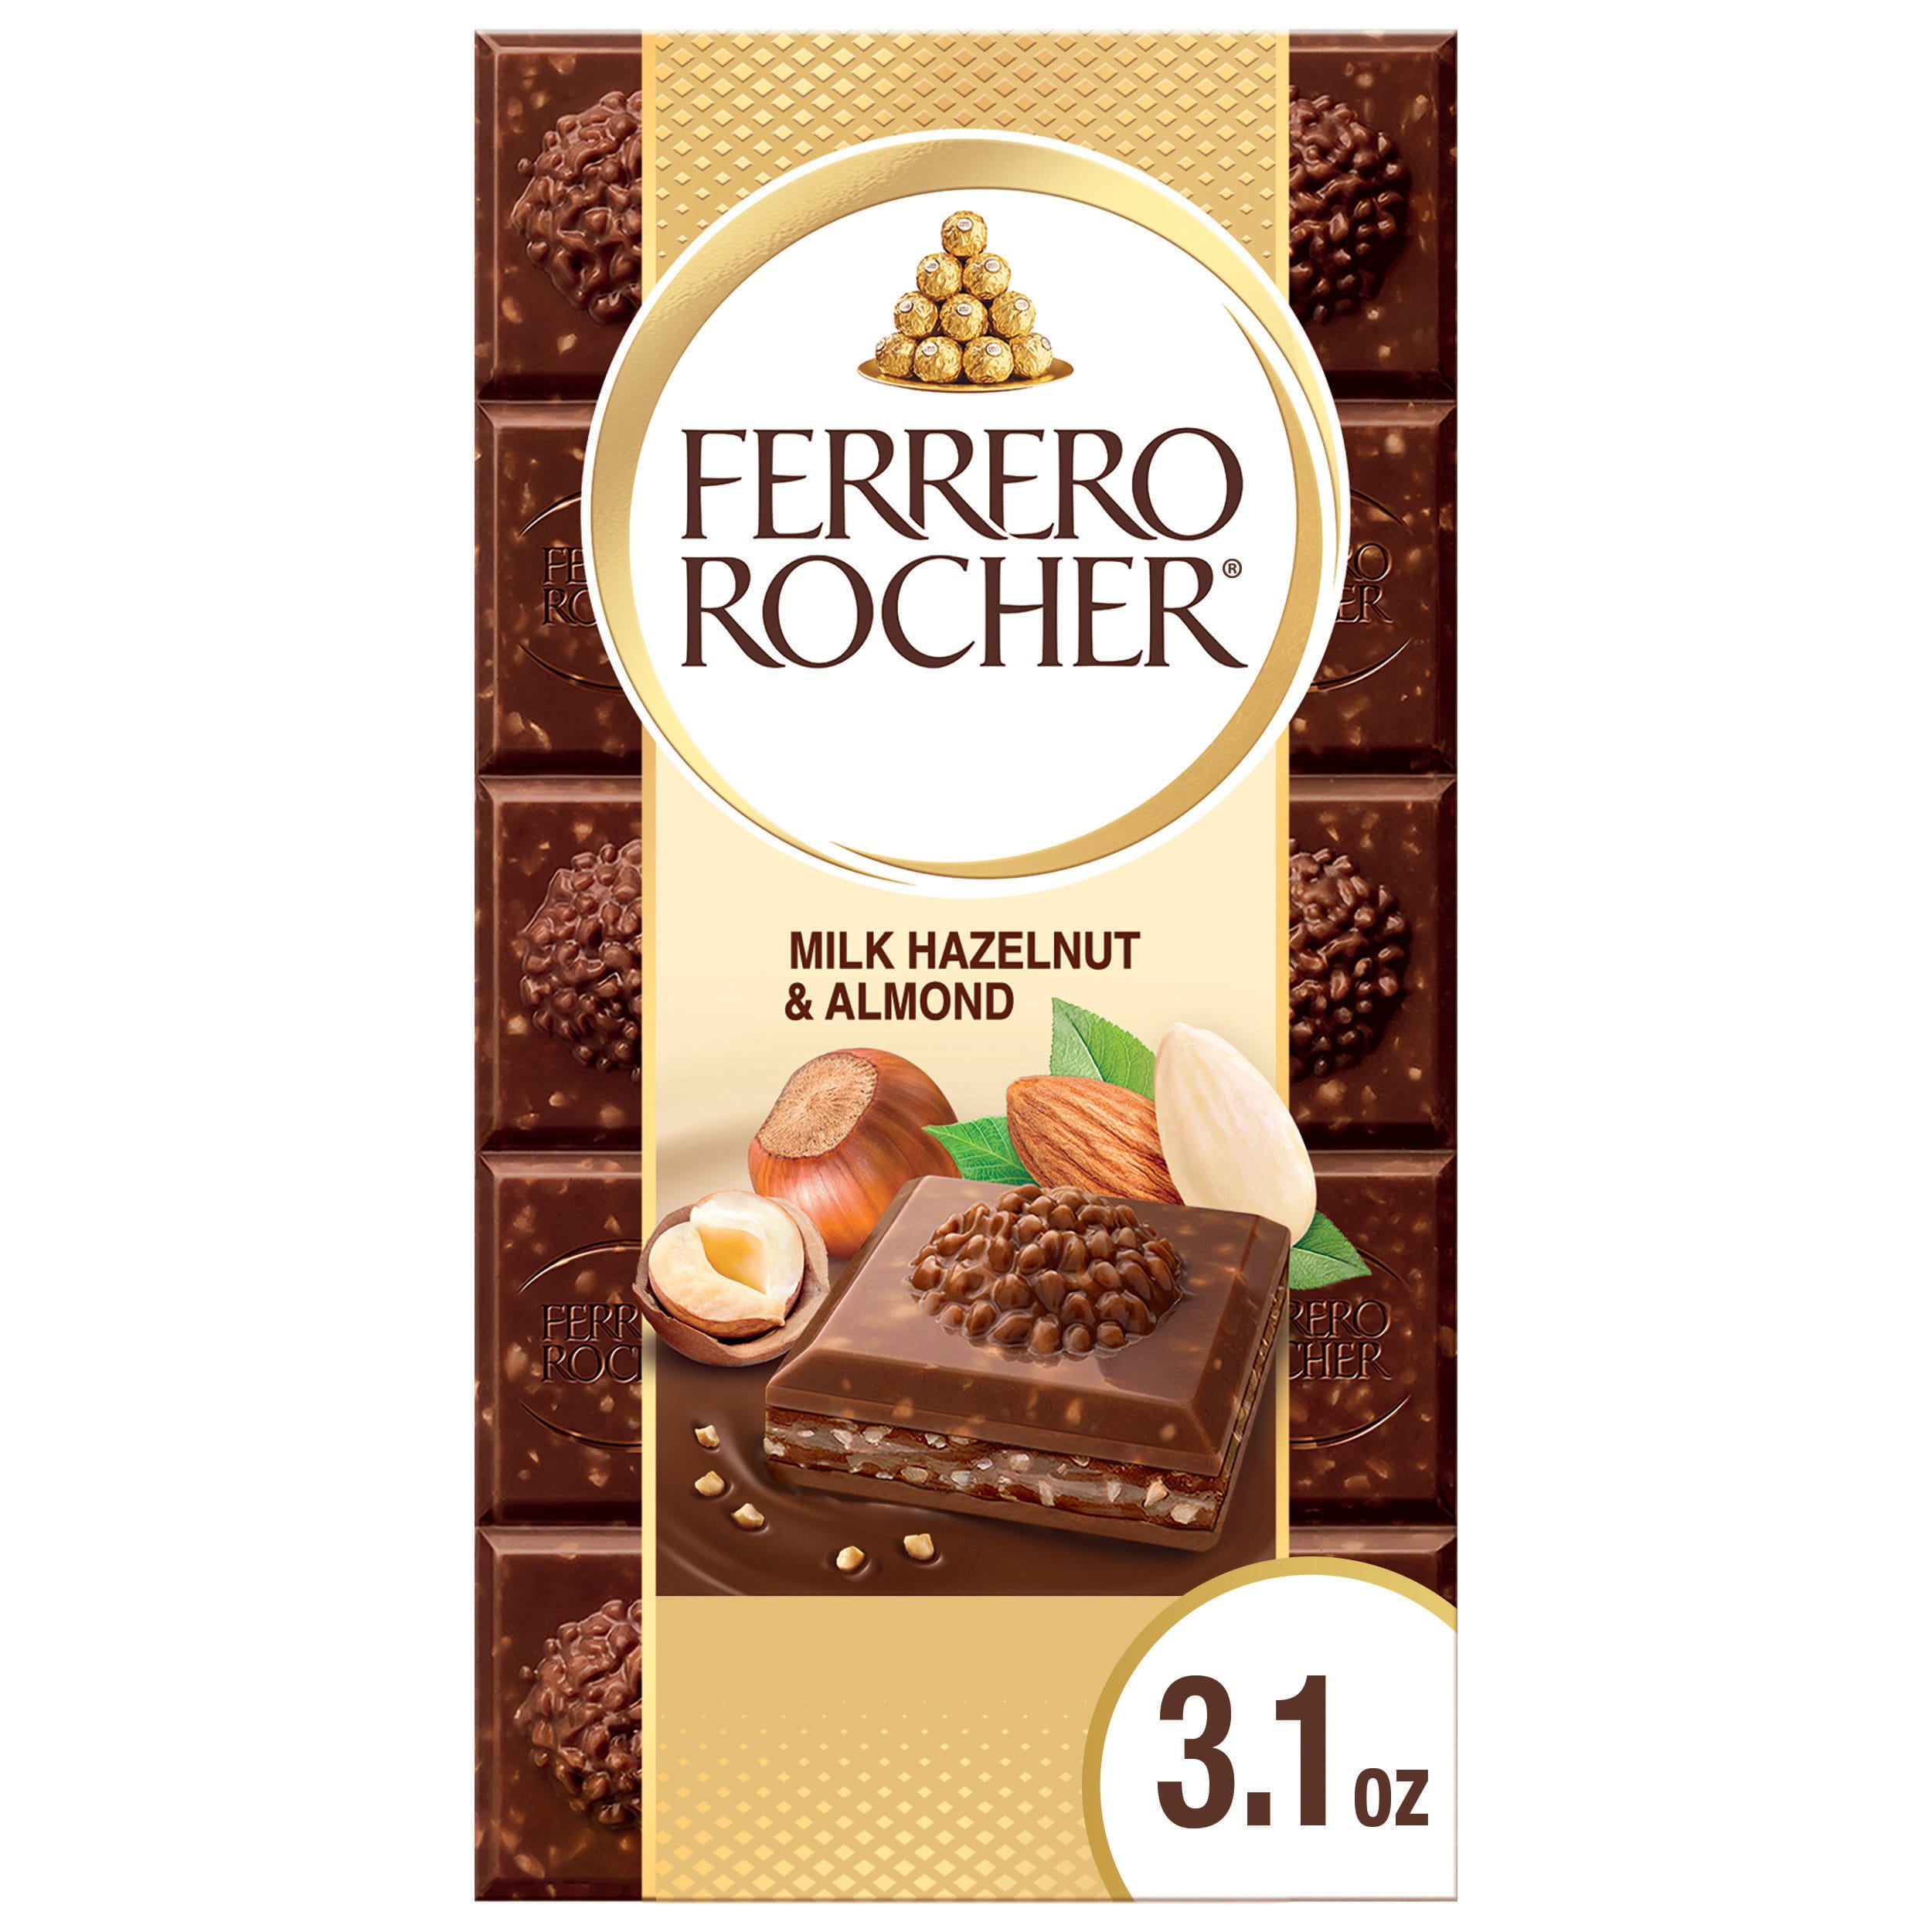 Ferrero Rocher Premium Chocolate Bar, Milk Chocolate Hazelnut and Almond, A Great Easter Gift, 3.1 oz